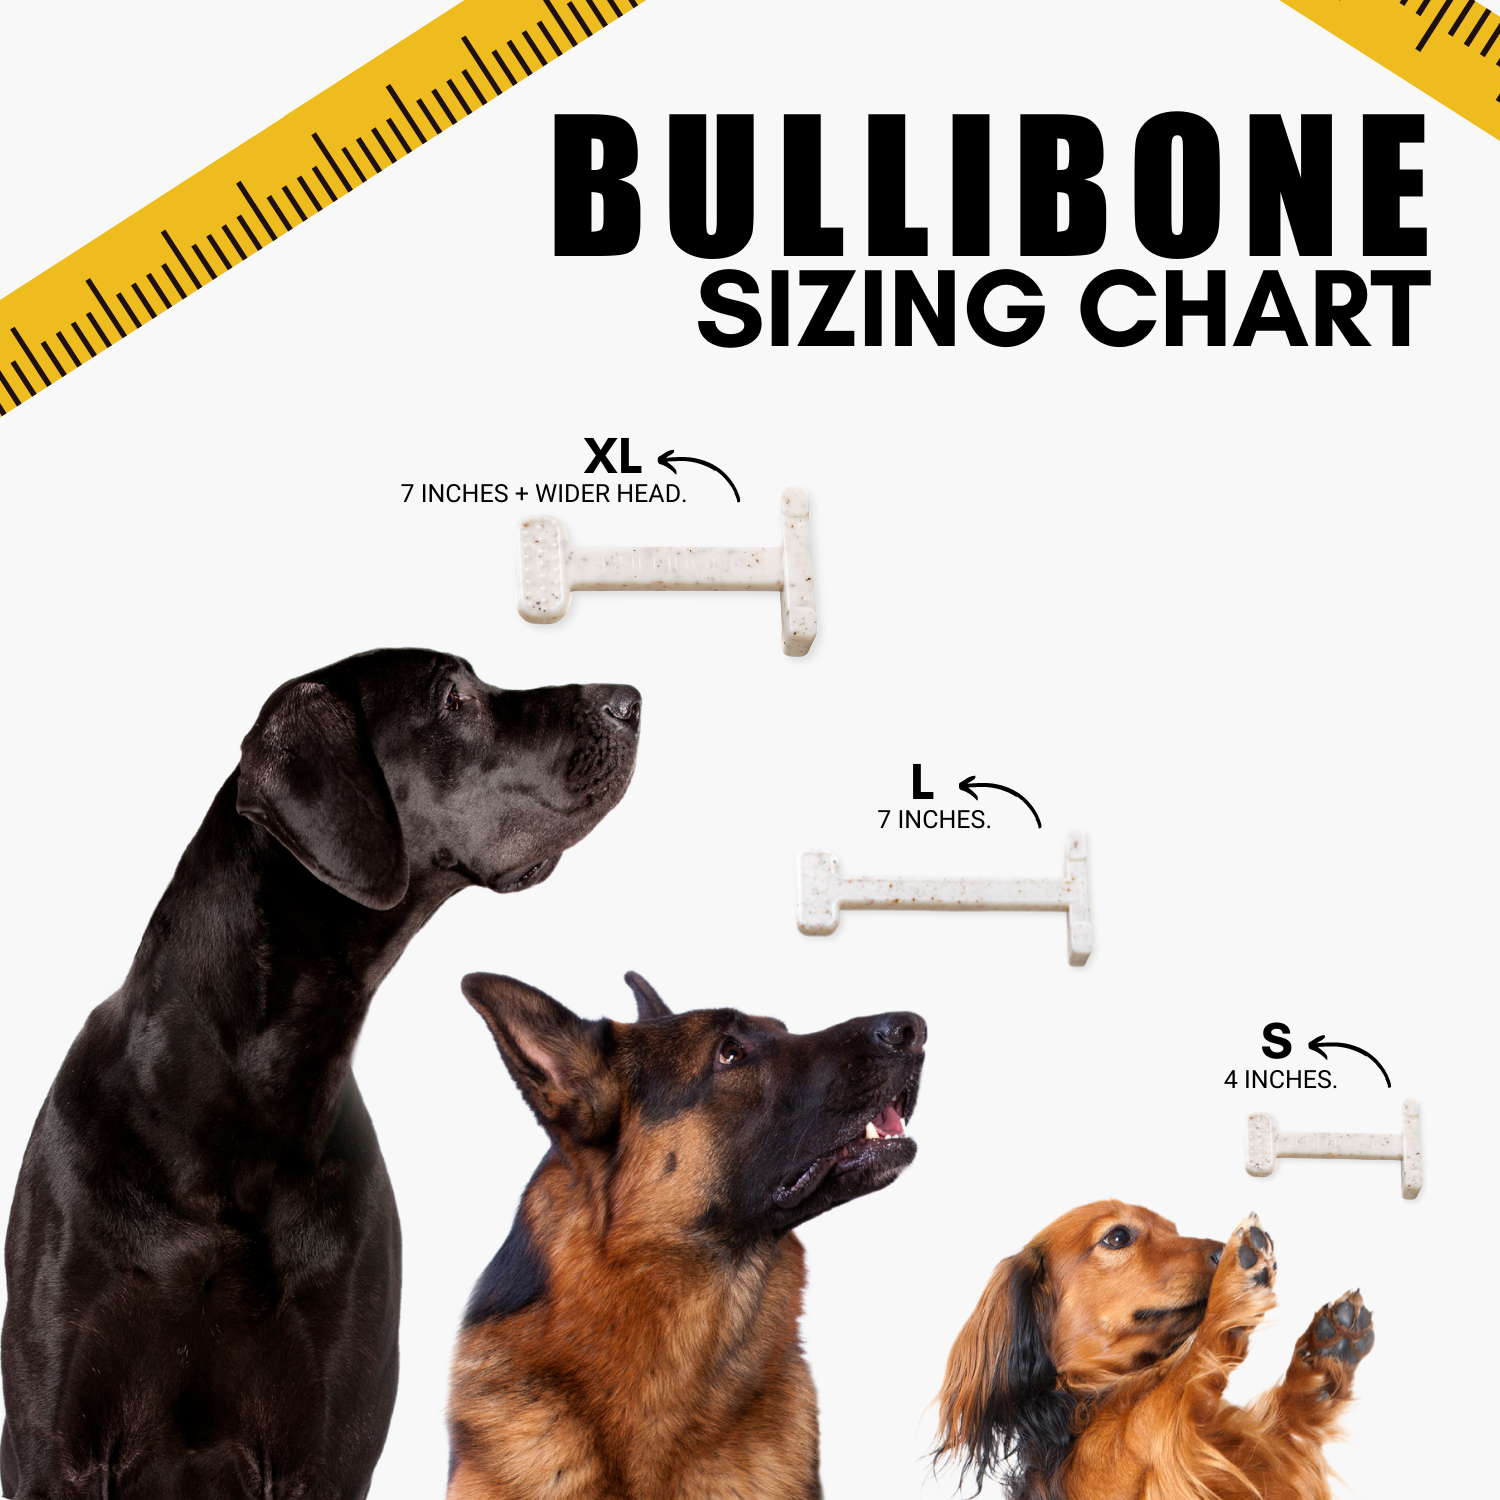 Beef Flavored Calming Dog Toys – shopbullibone